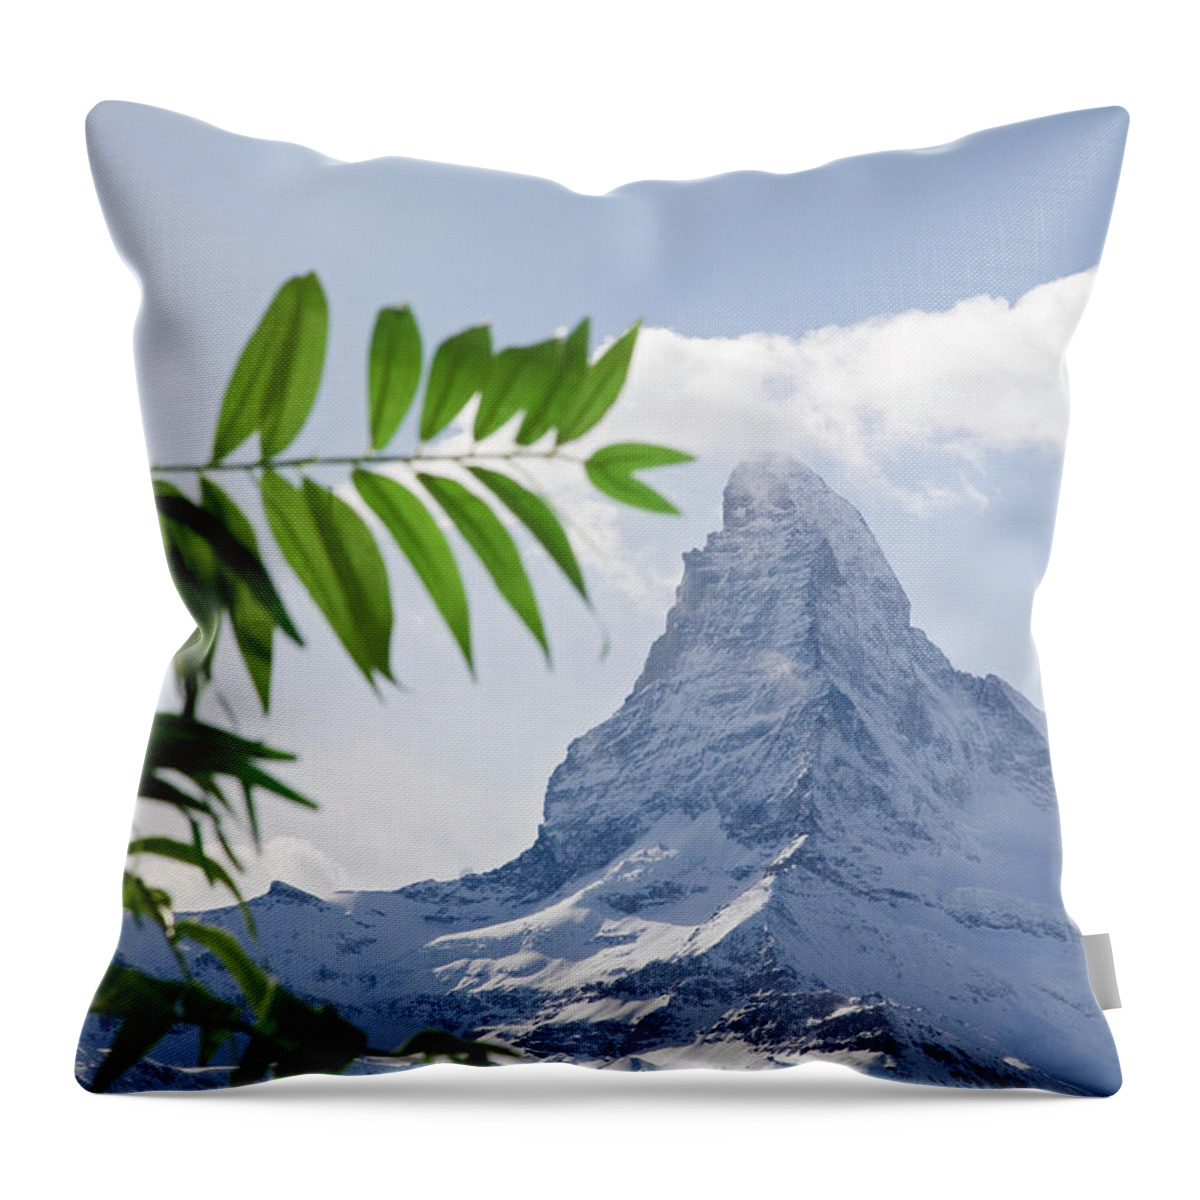 Ip_10278102 Throw Pillow featuring the photograph View Of Snow Capped Matterhorn Mountain, Valais, Switzerland #1 by Jalag / Walter Schmitz